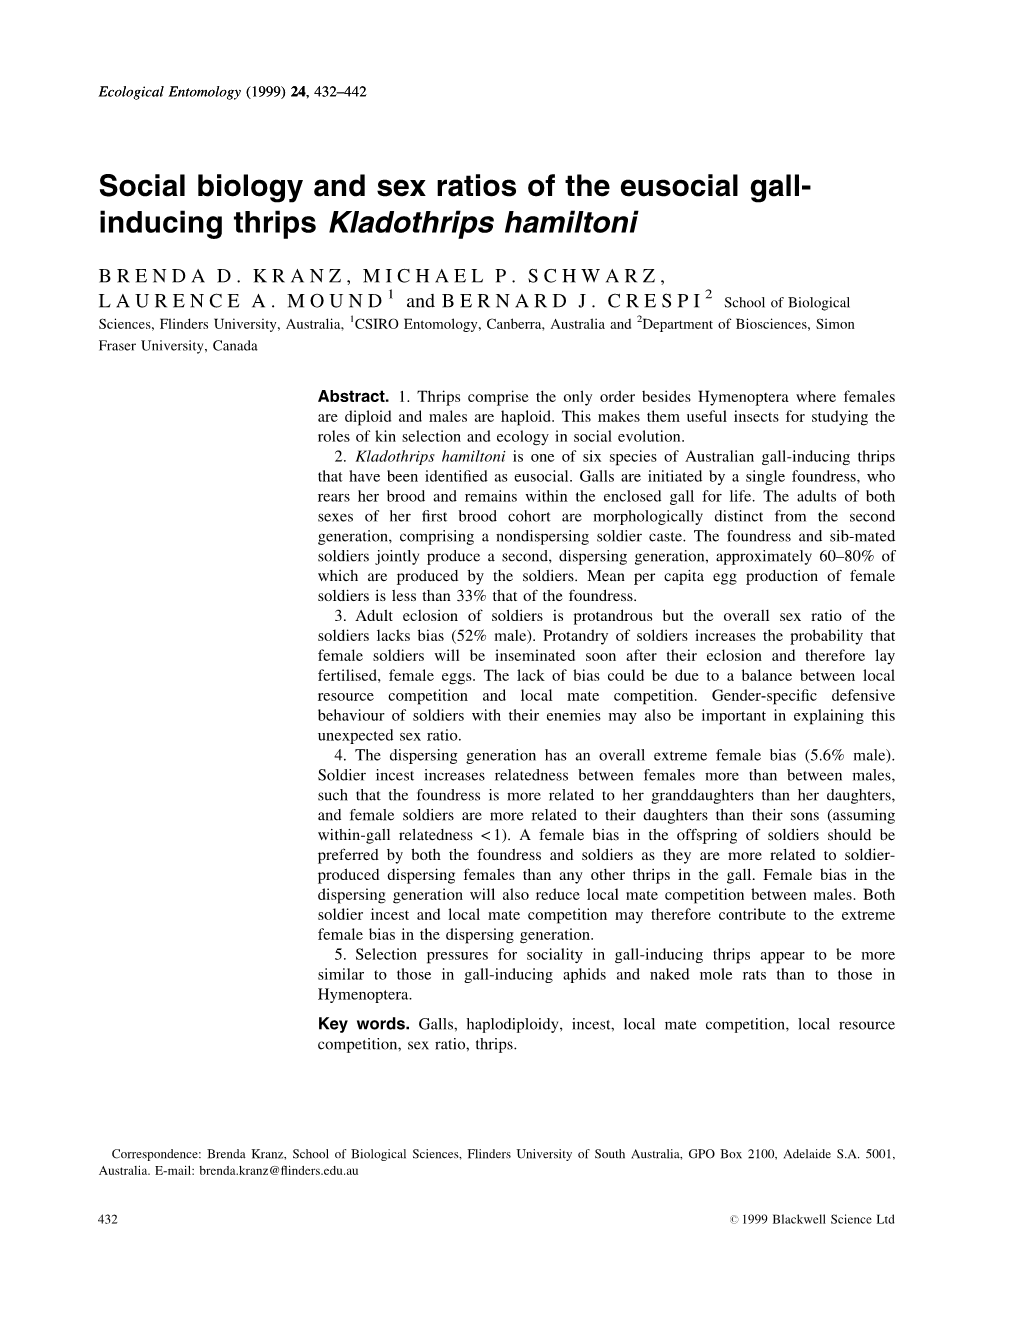 Social Biology and Sex Ratios of the Eusocial Gall- Inducing Thrips Kladothrips Hamiltoni